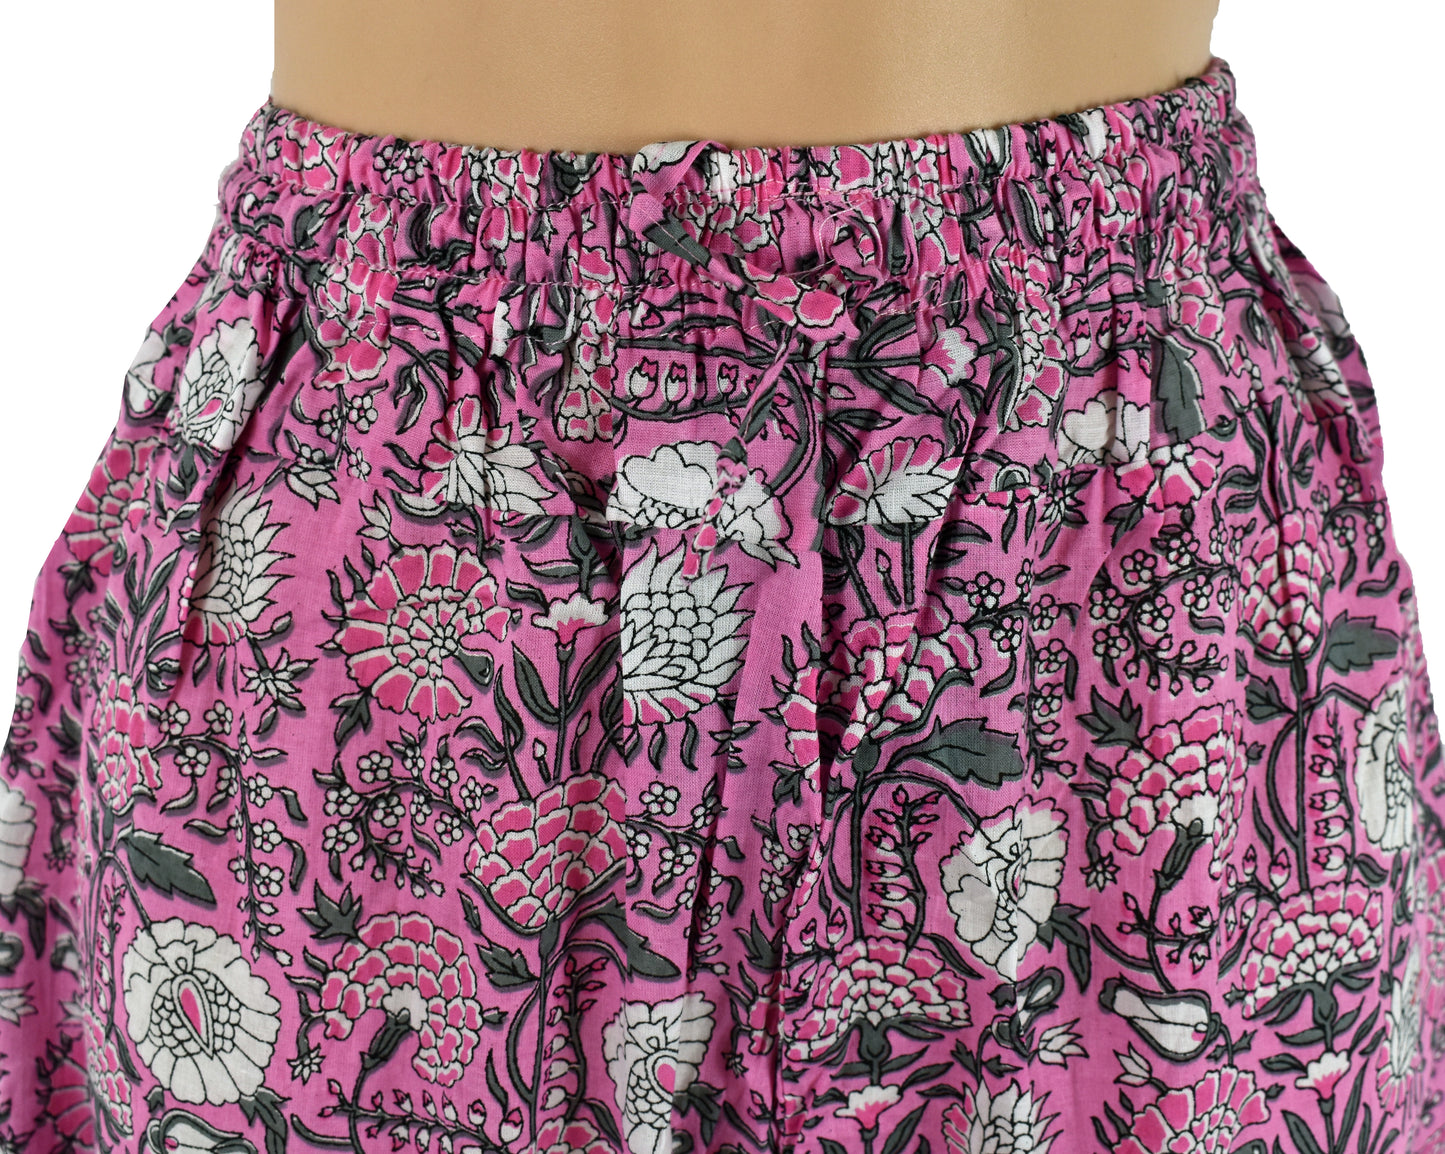 Indian Block Print Summer Trousers